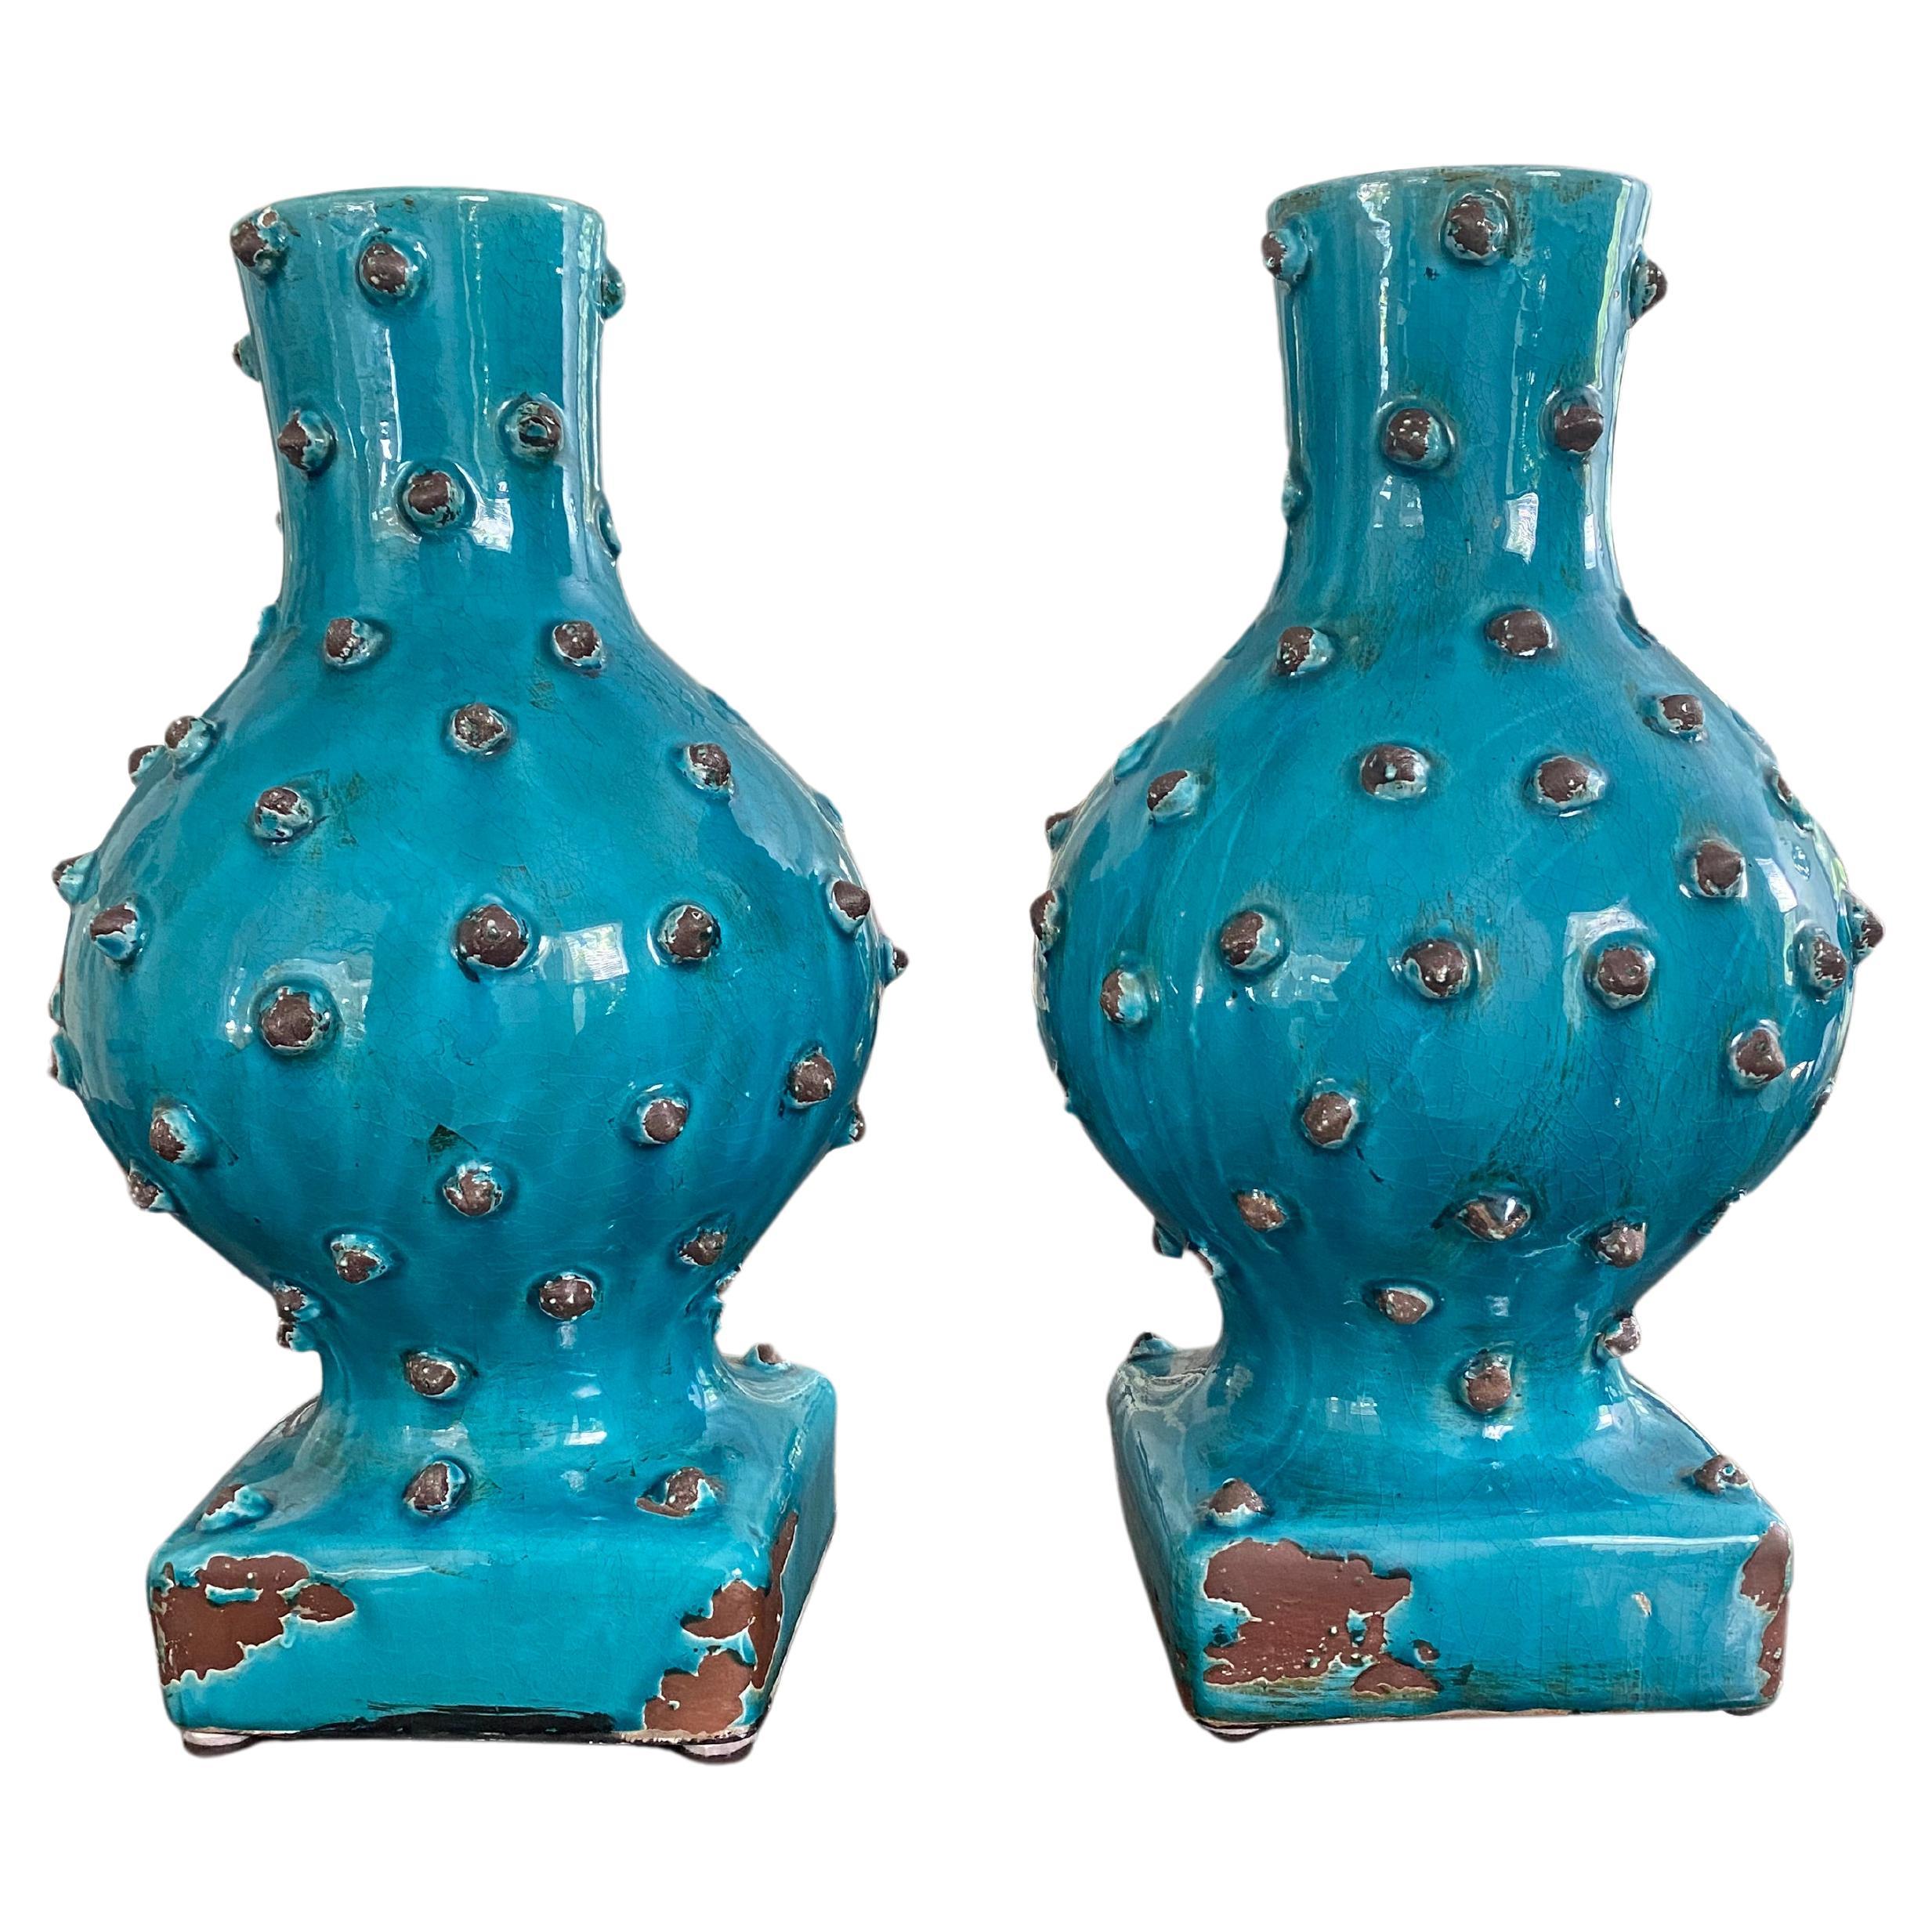 Pair of Brutalist vases Francois Bernard Paris designer France turquoise 